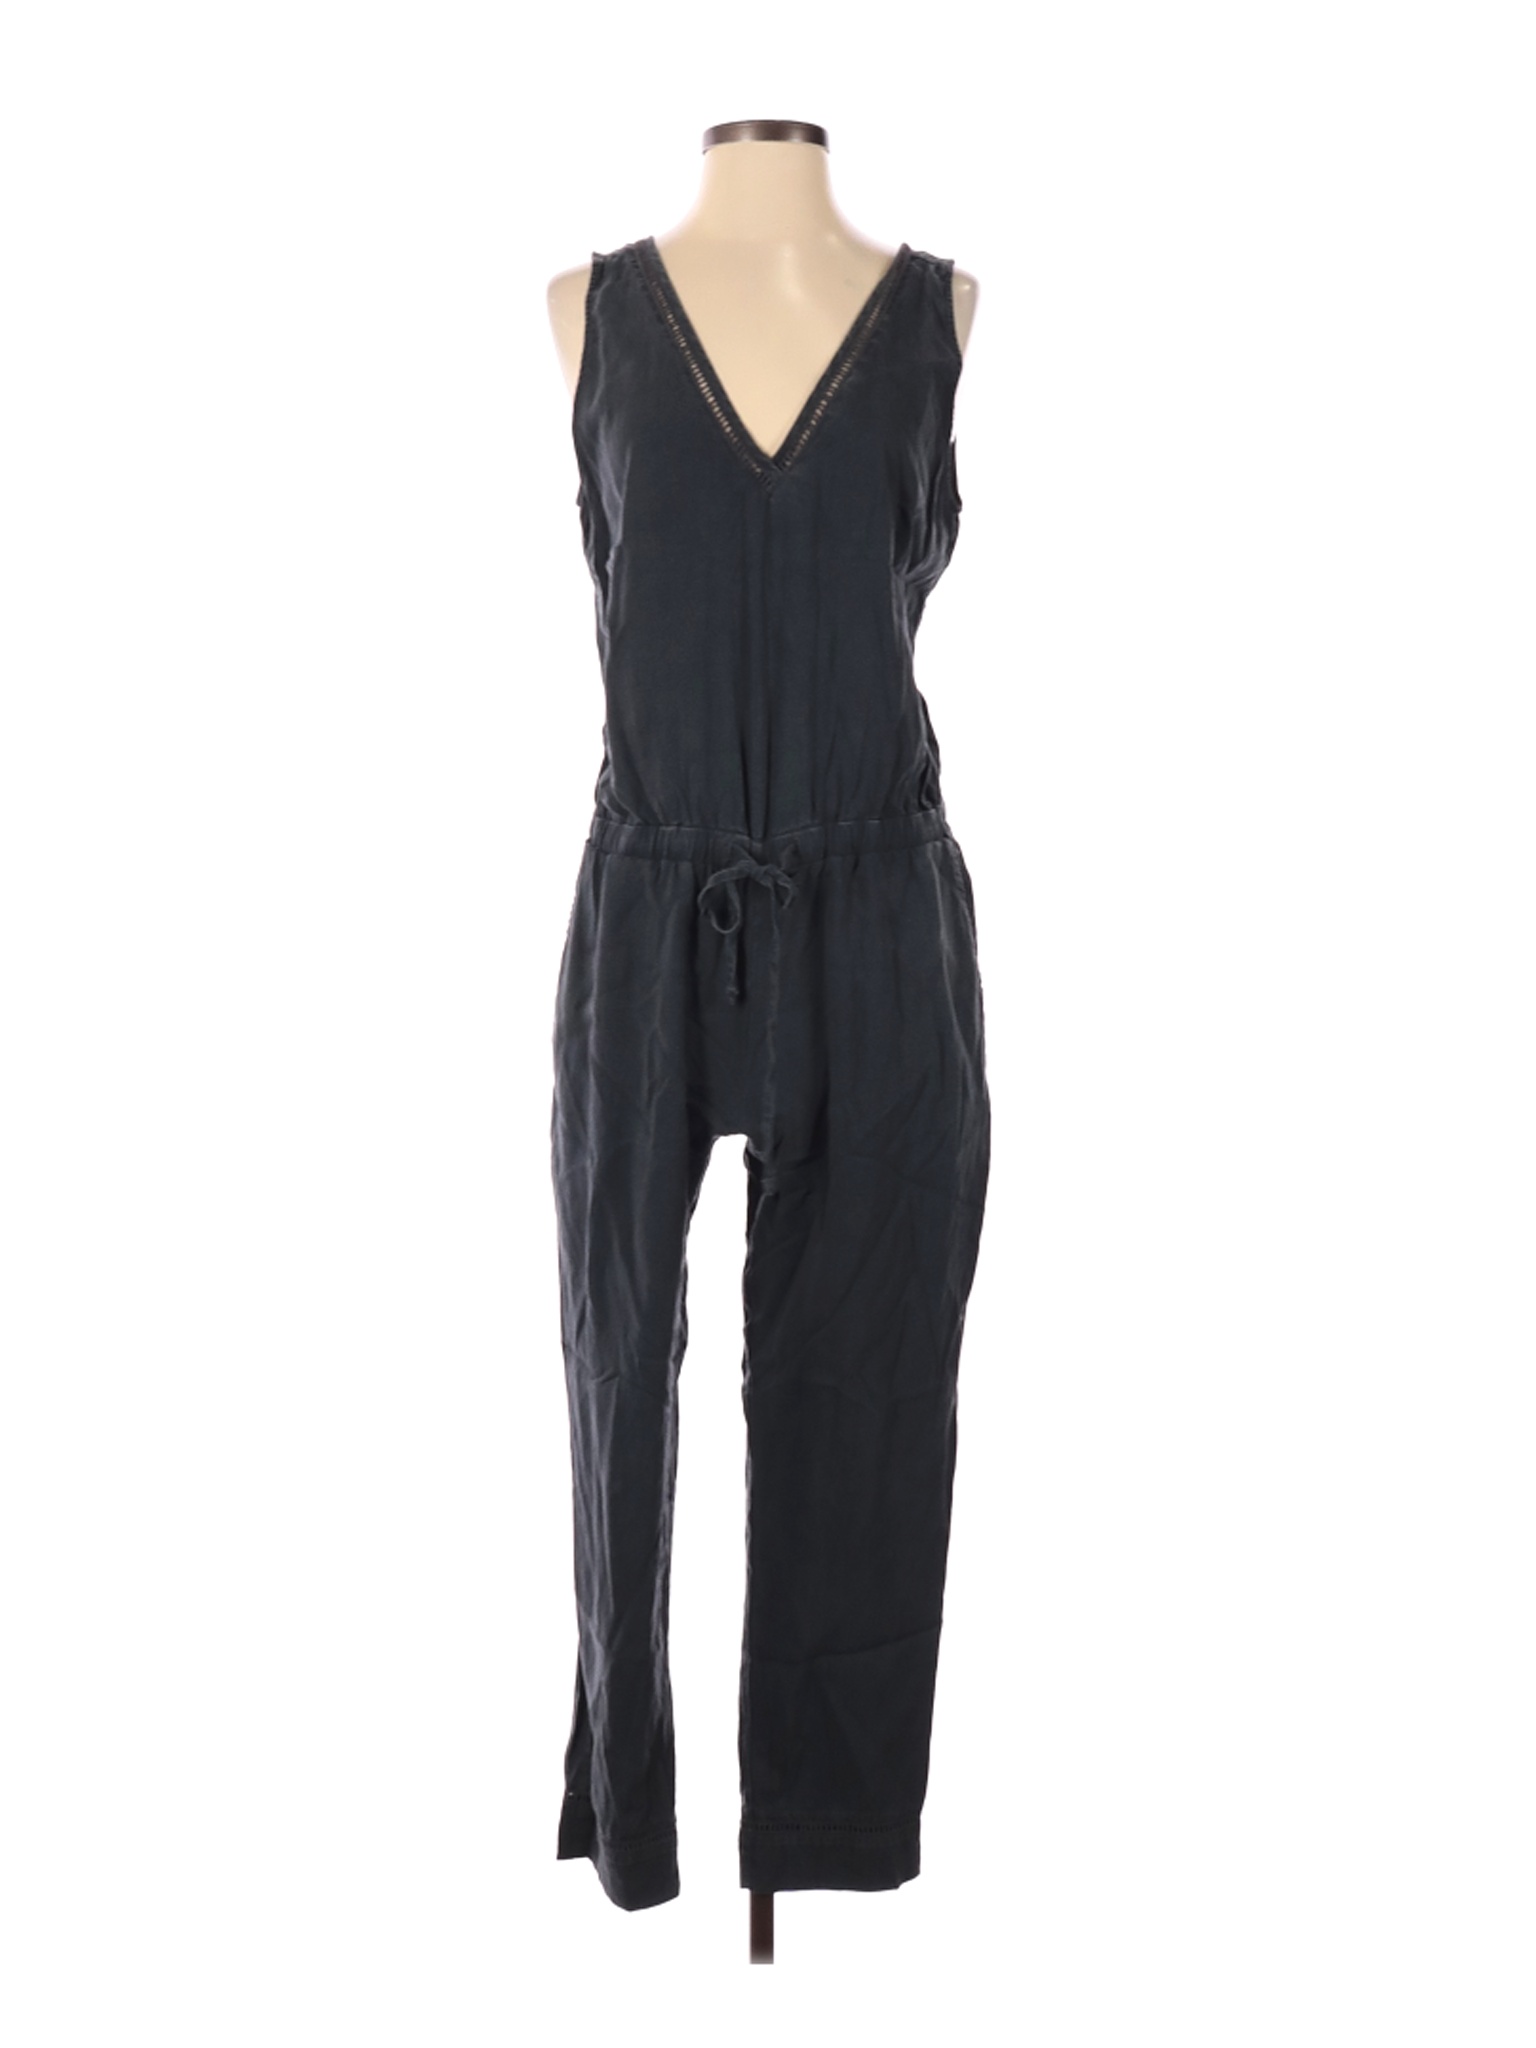 Cloth & Stone Women Black Jumpsuit S | eBay